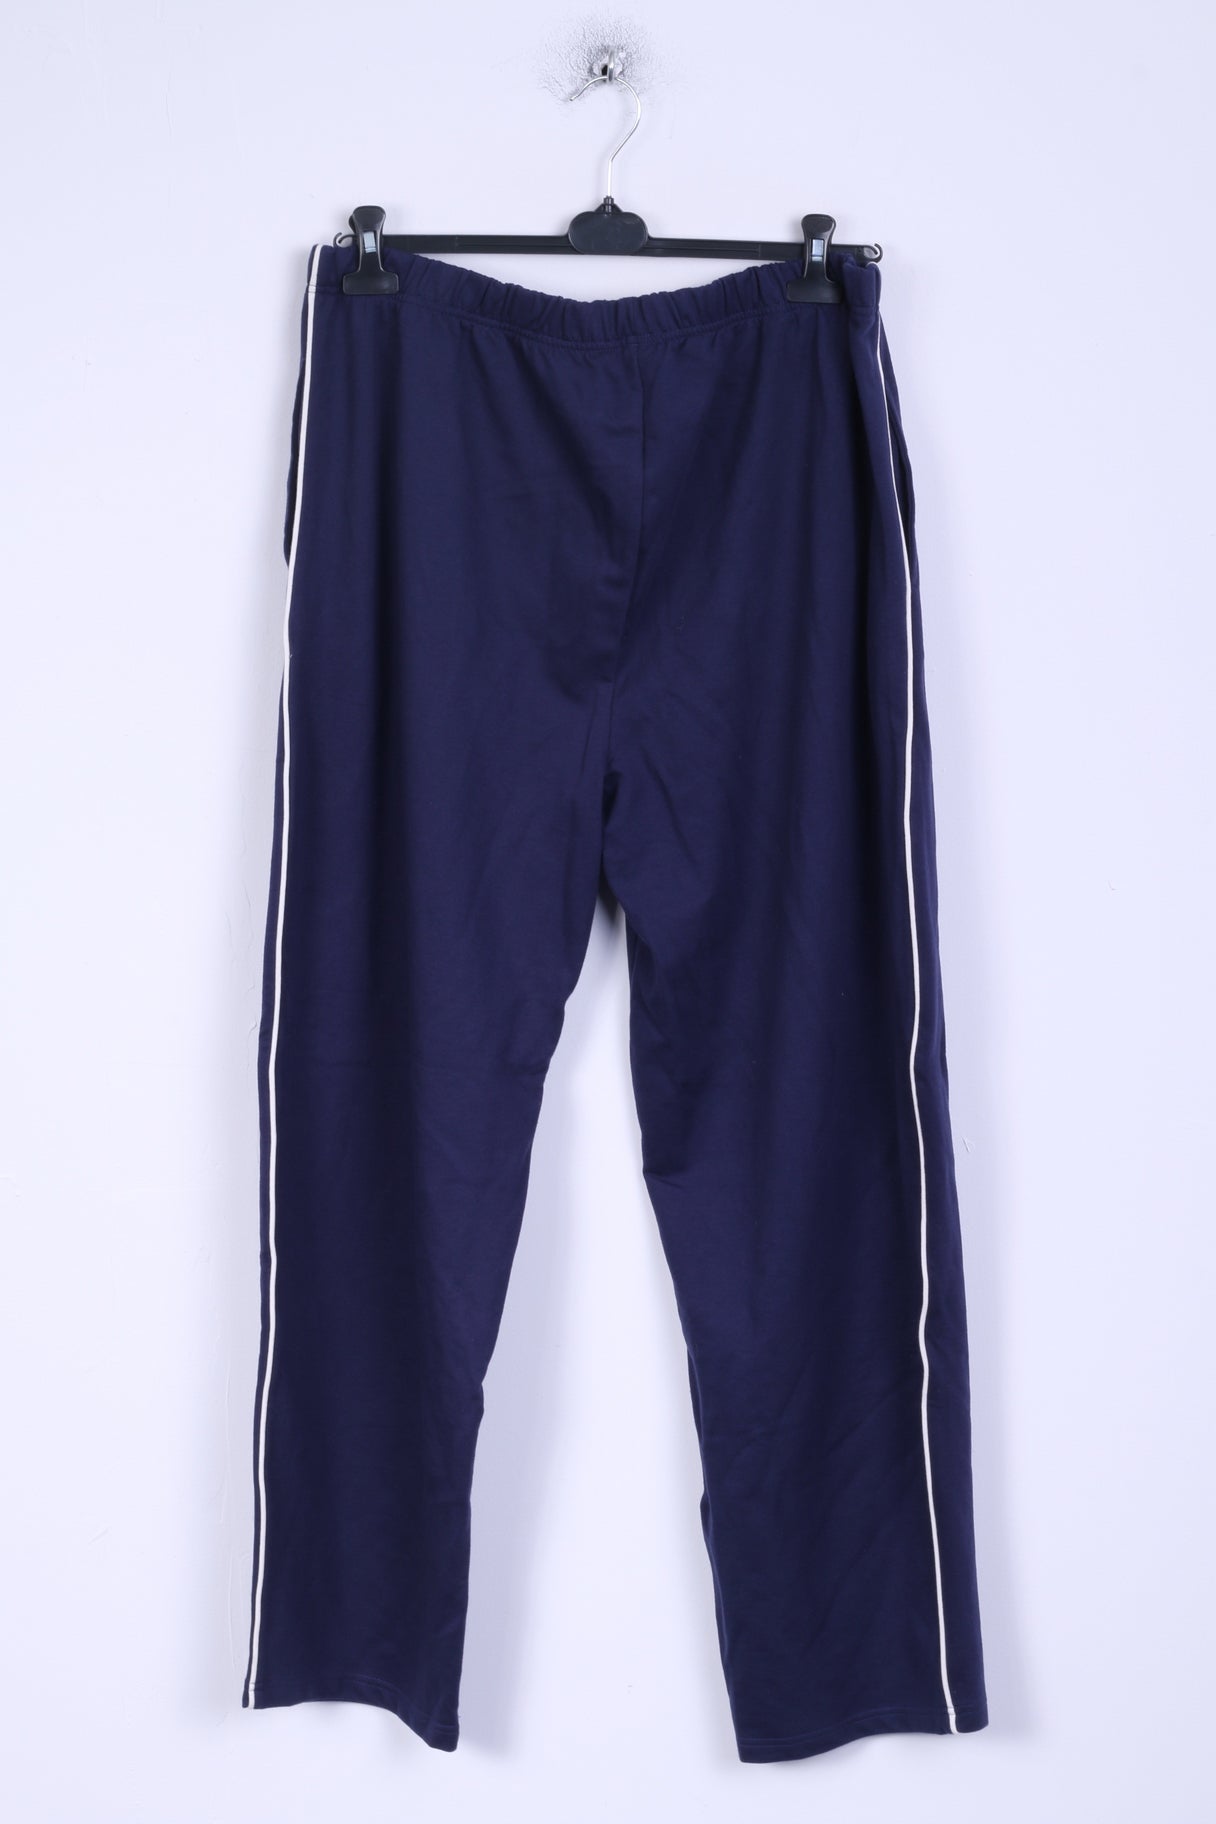 Unbranded Mens 48 XXL Sweatpants Navy Cotton Sport Training Pants